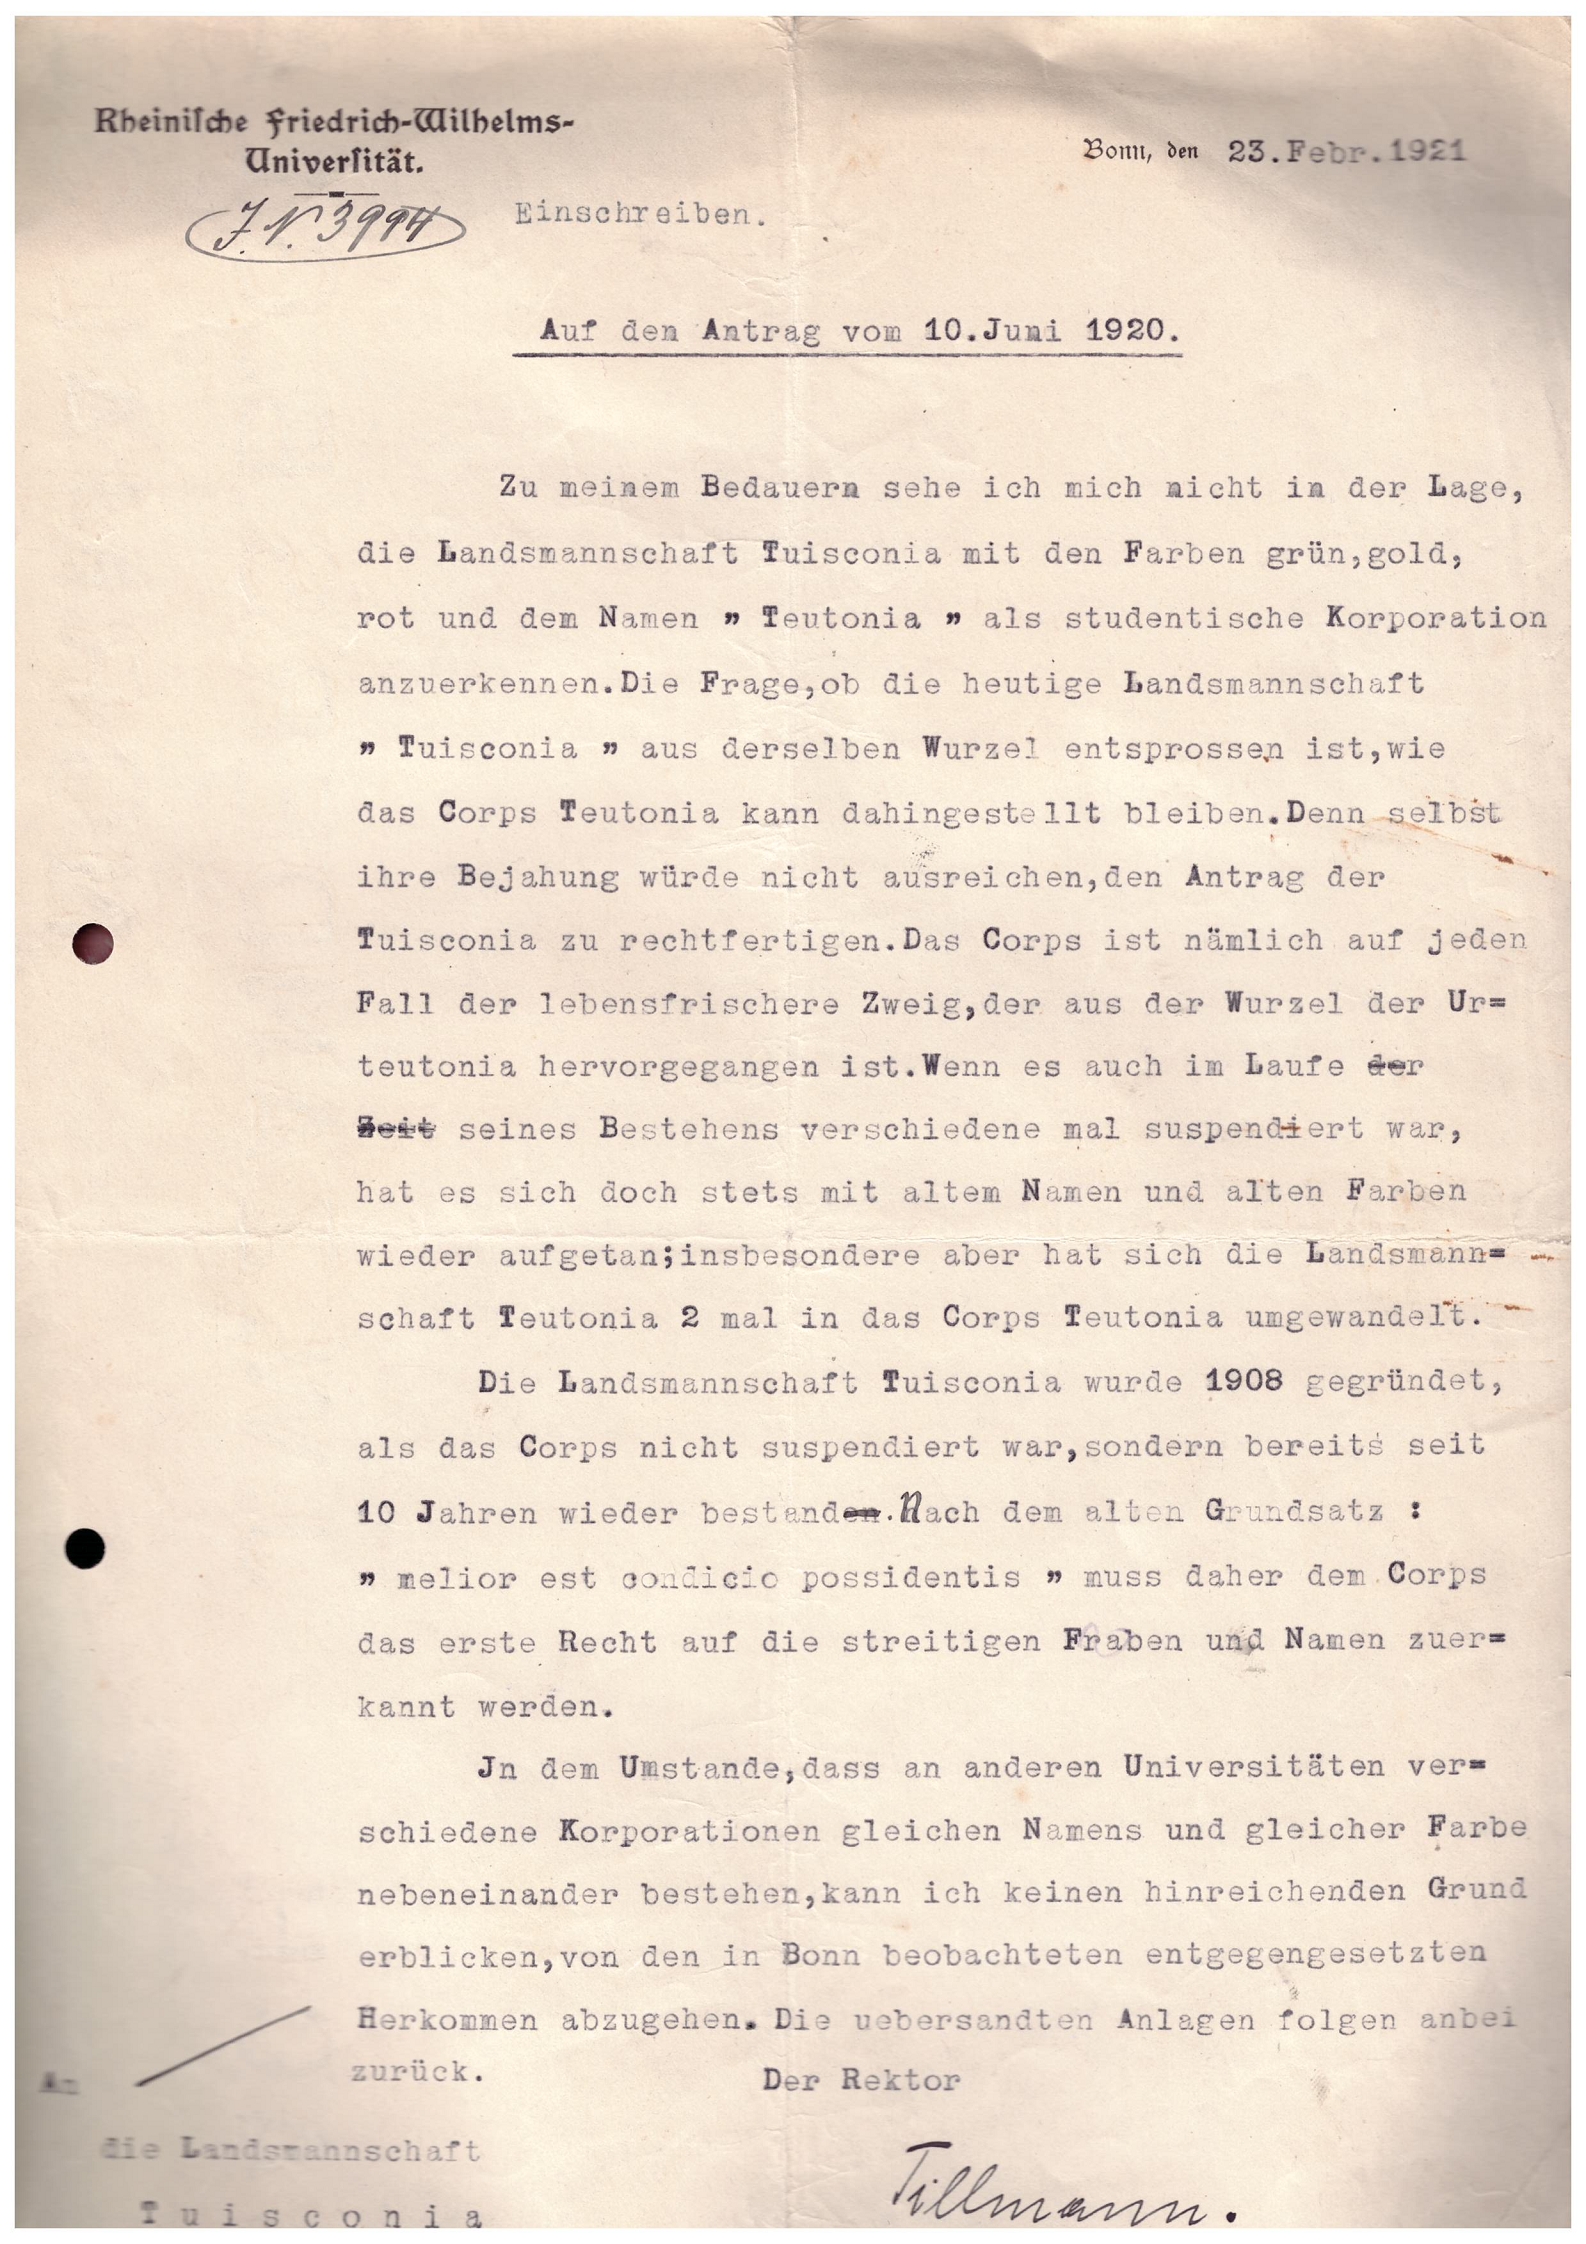 history/Dokumente/19210223_Universitaet_Bonn_Rektor_an_L_Tuisconia.